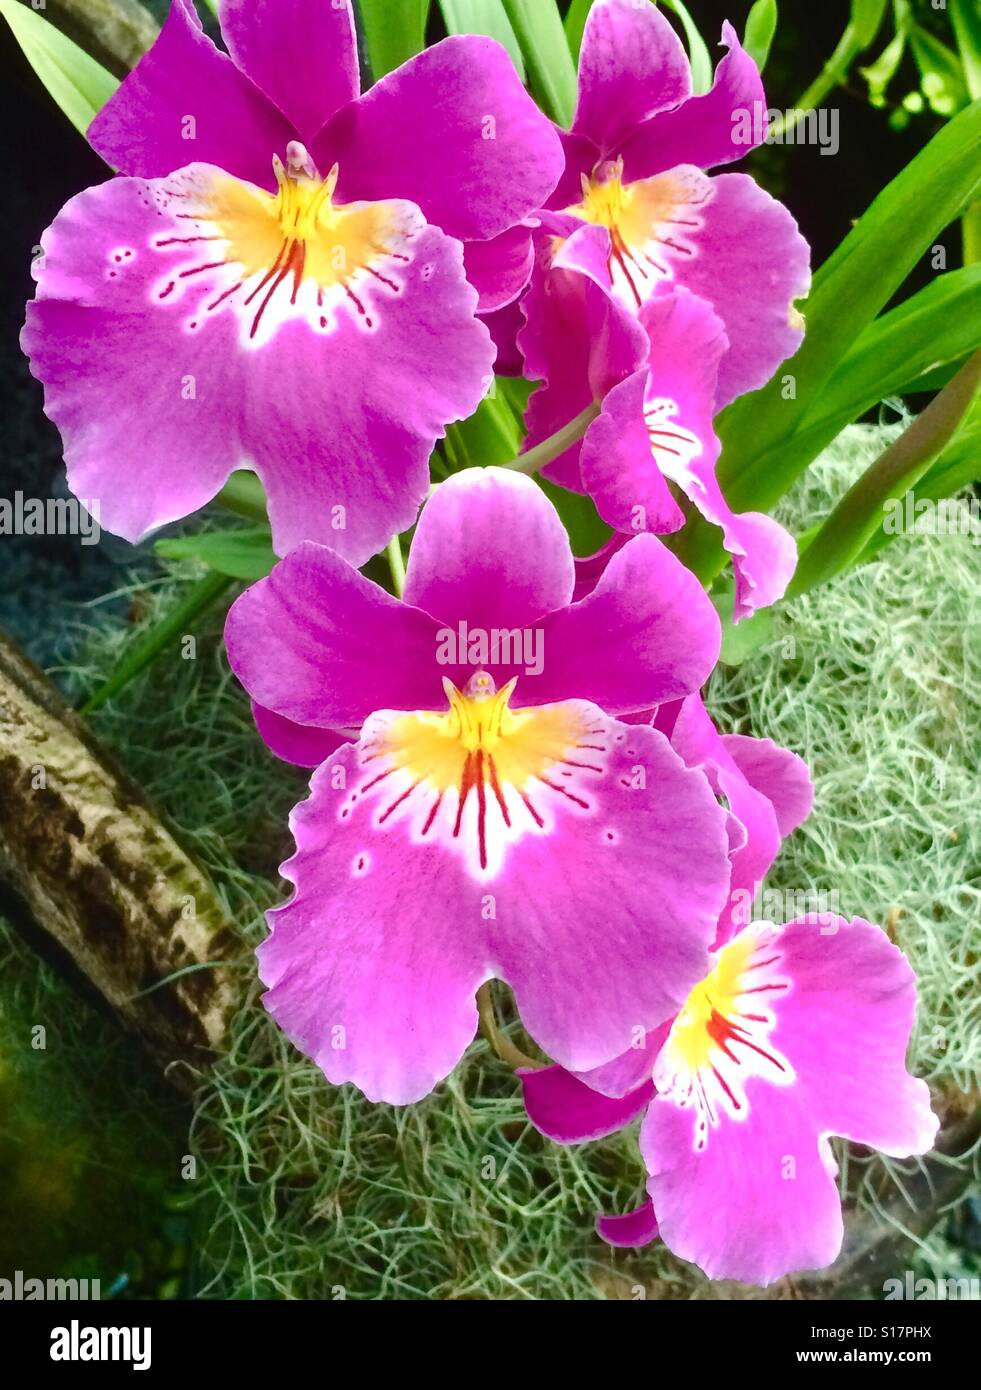 Rosa Oncidium orquídeas Fotografía de stock - Alamy